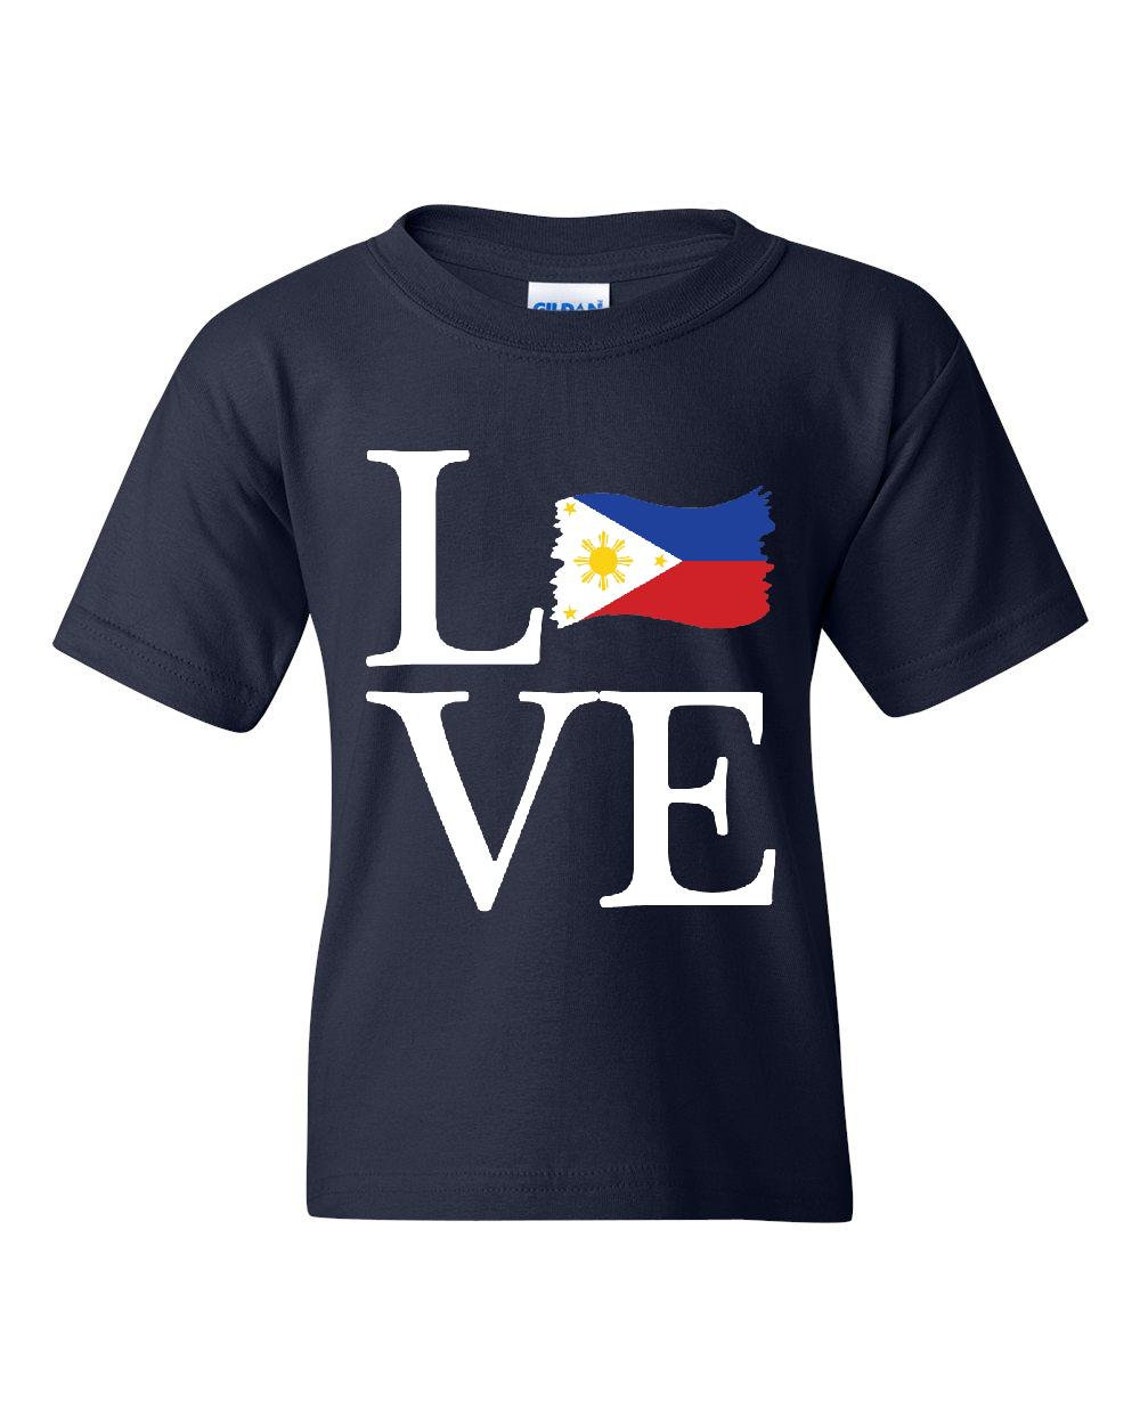 Love Philippines Unisex Youth Shirts T-Shirt Tee | Etsy